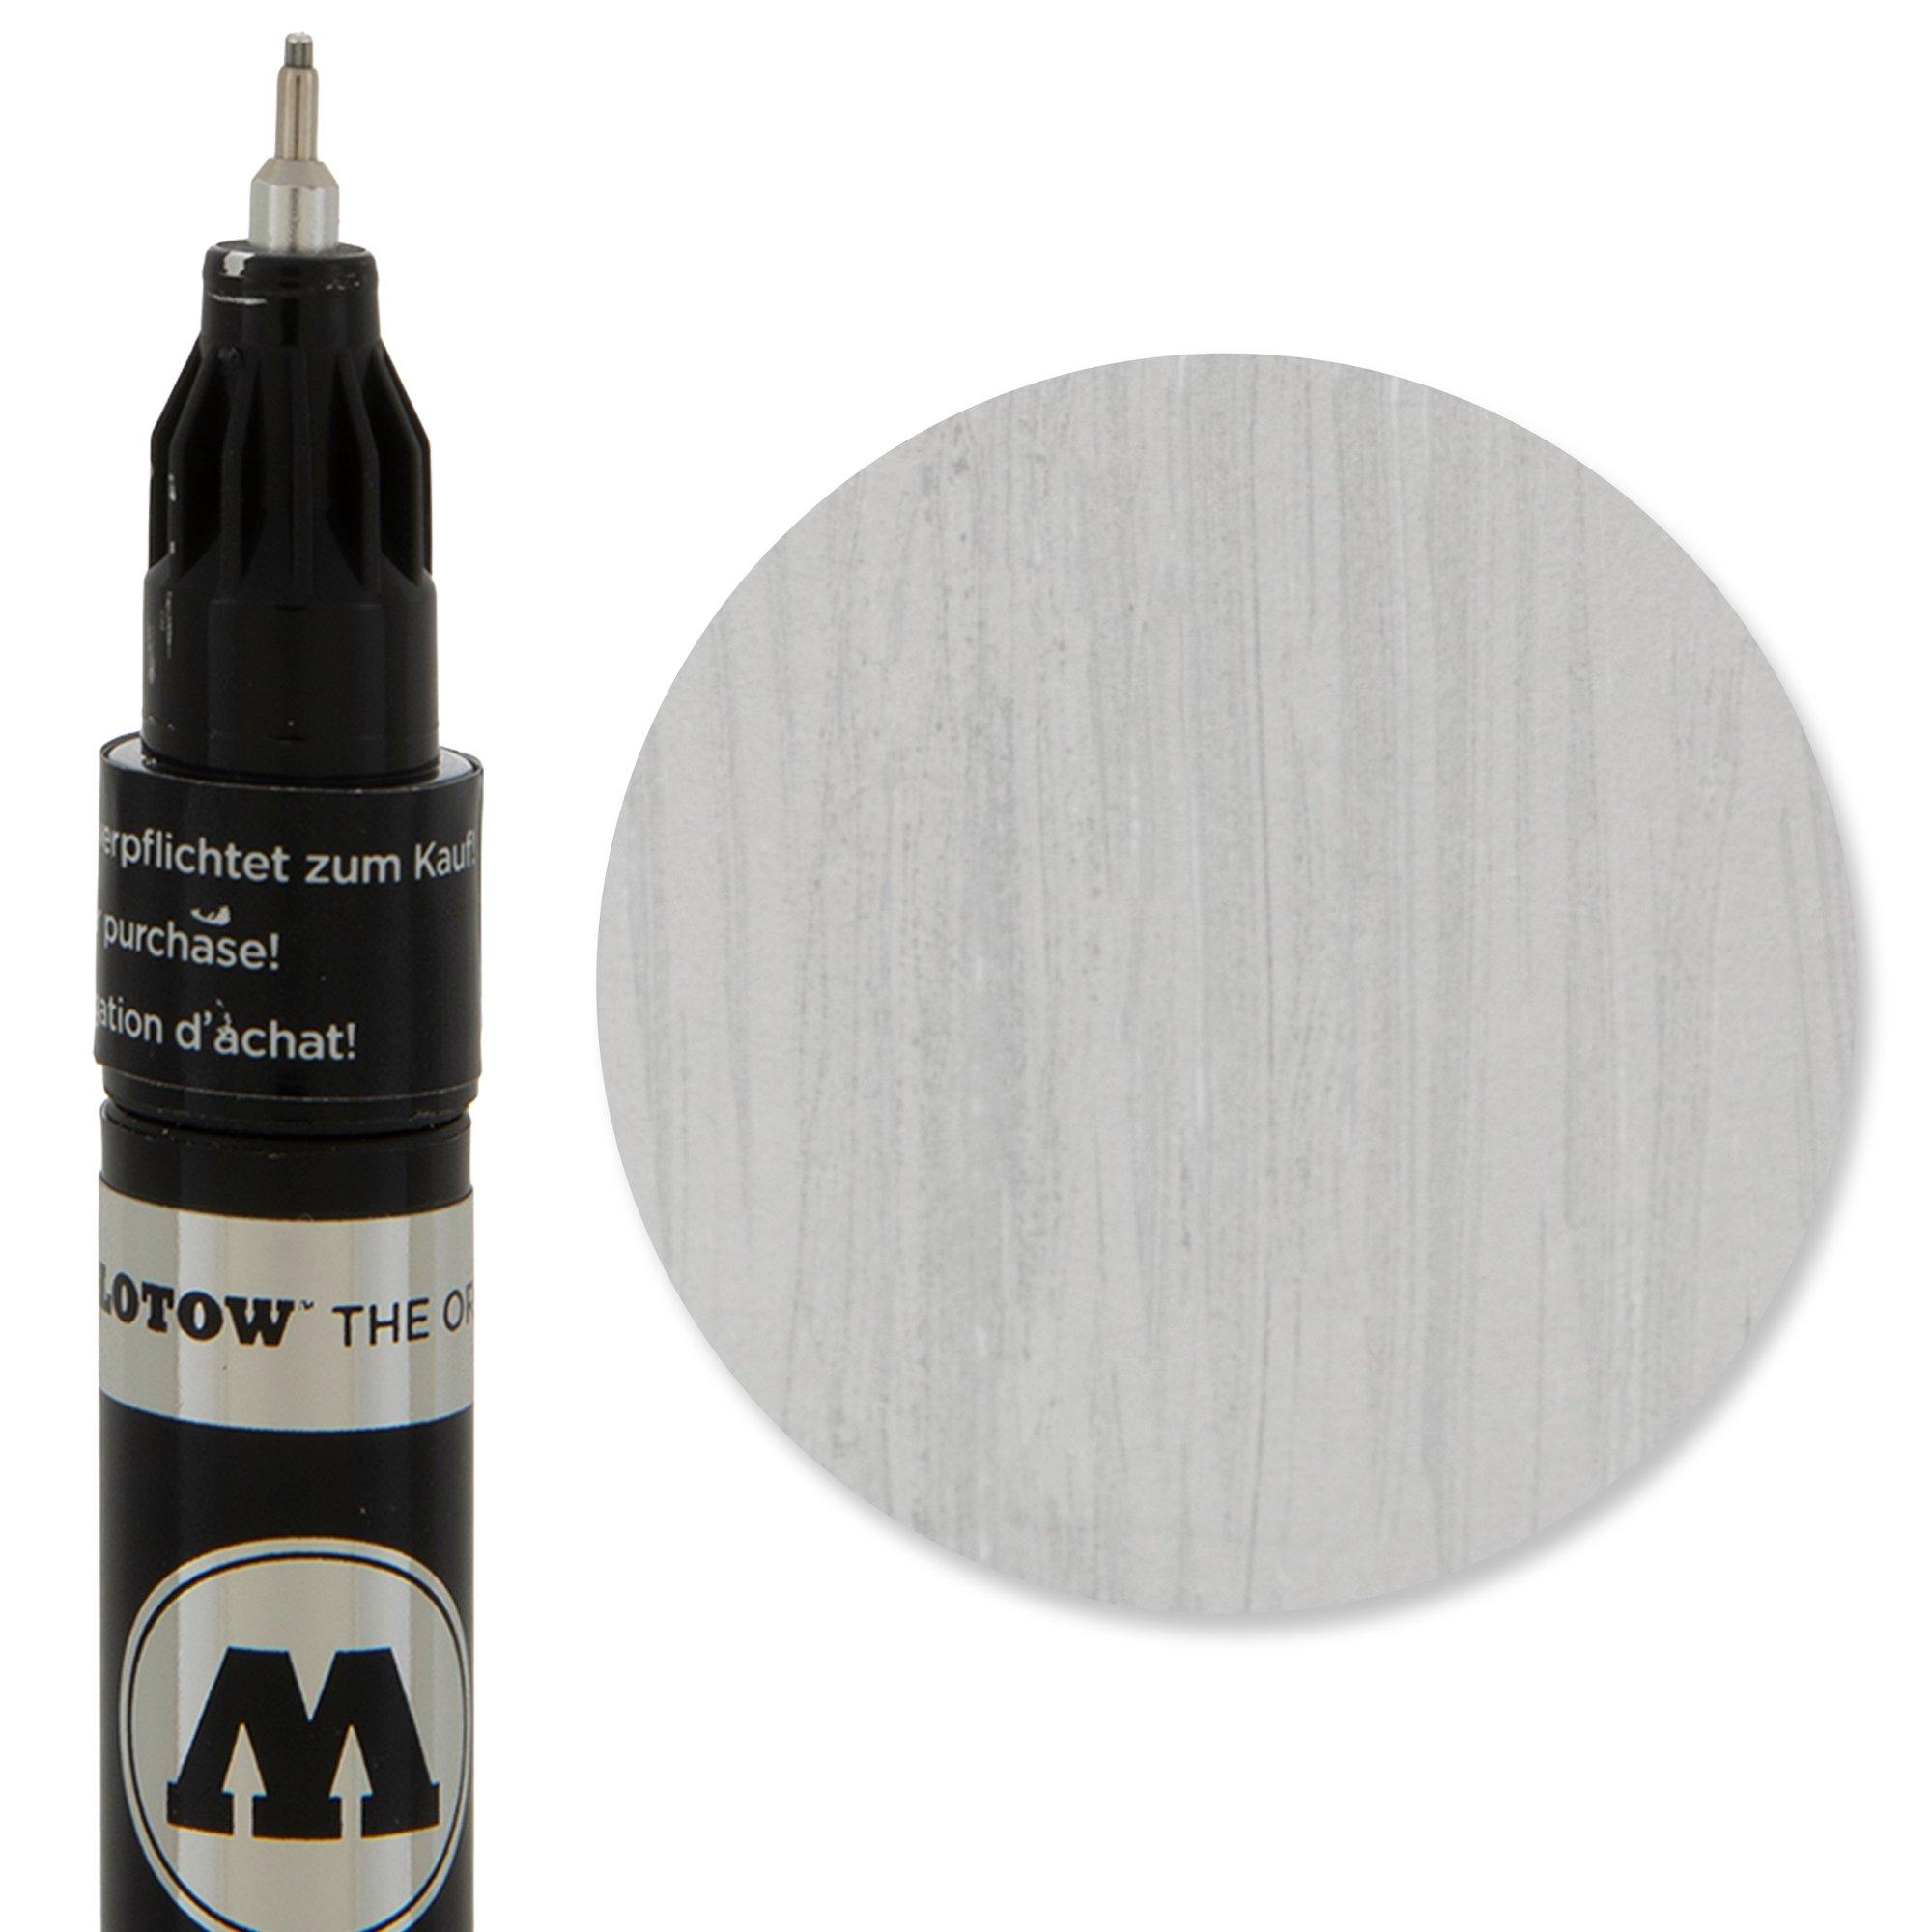 Molotow Liquid Chrome Marker - 2 mm